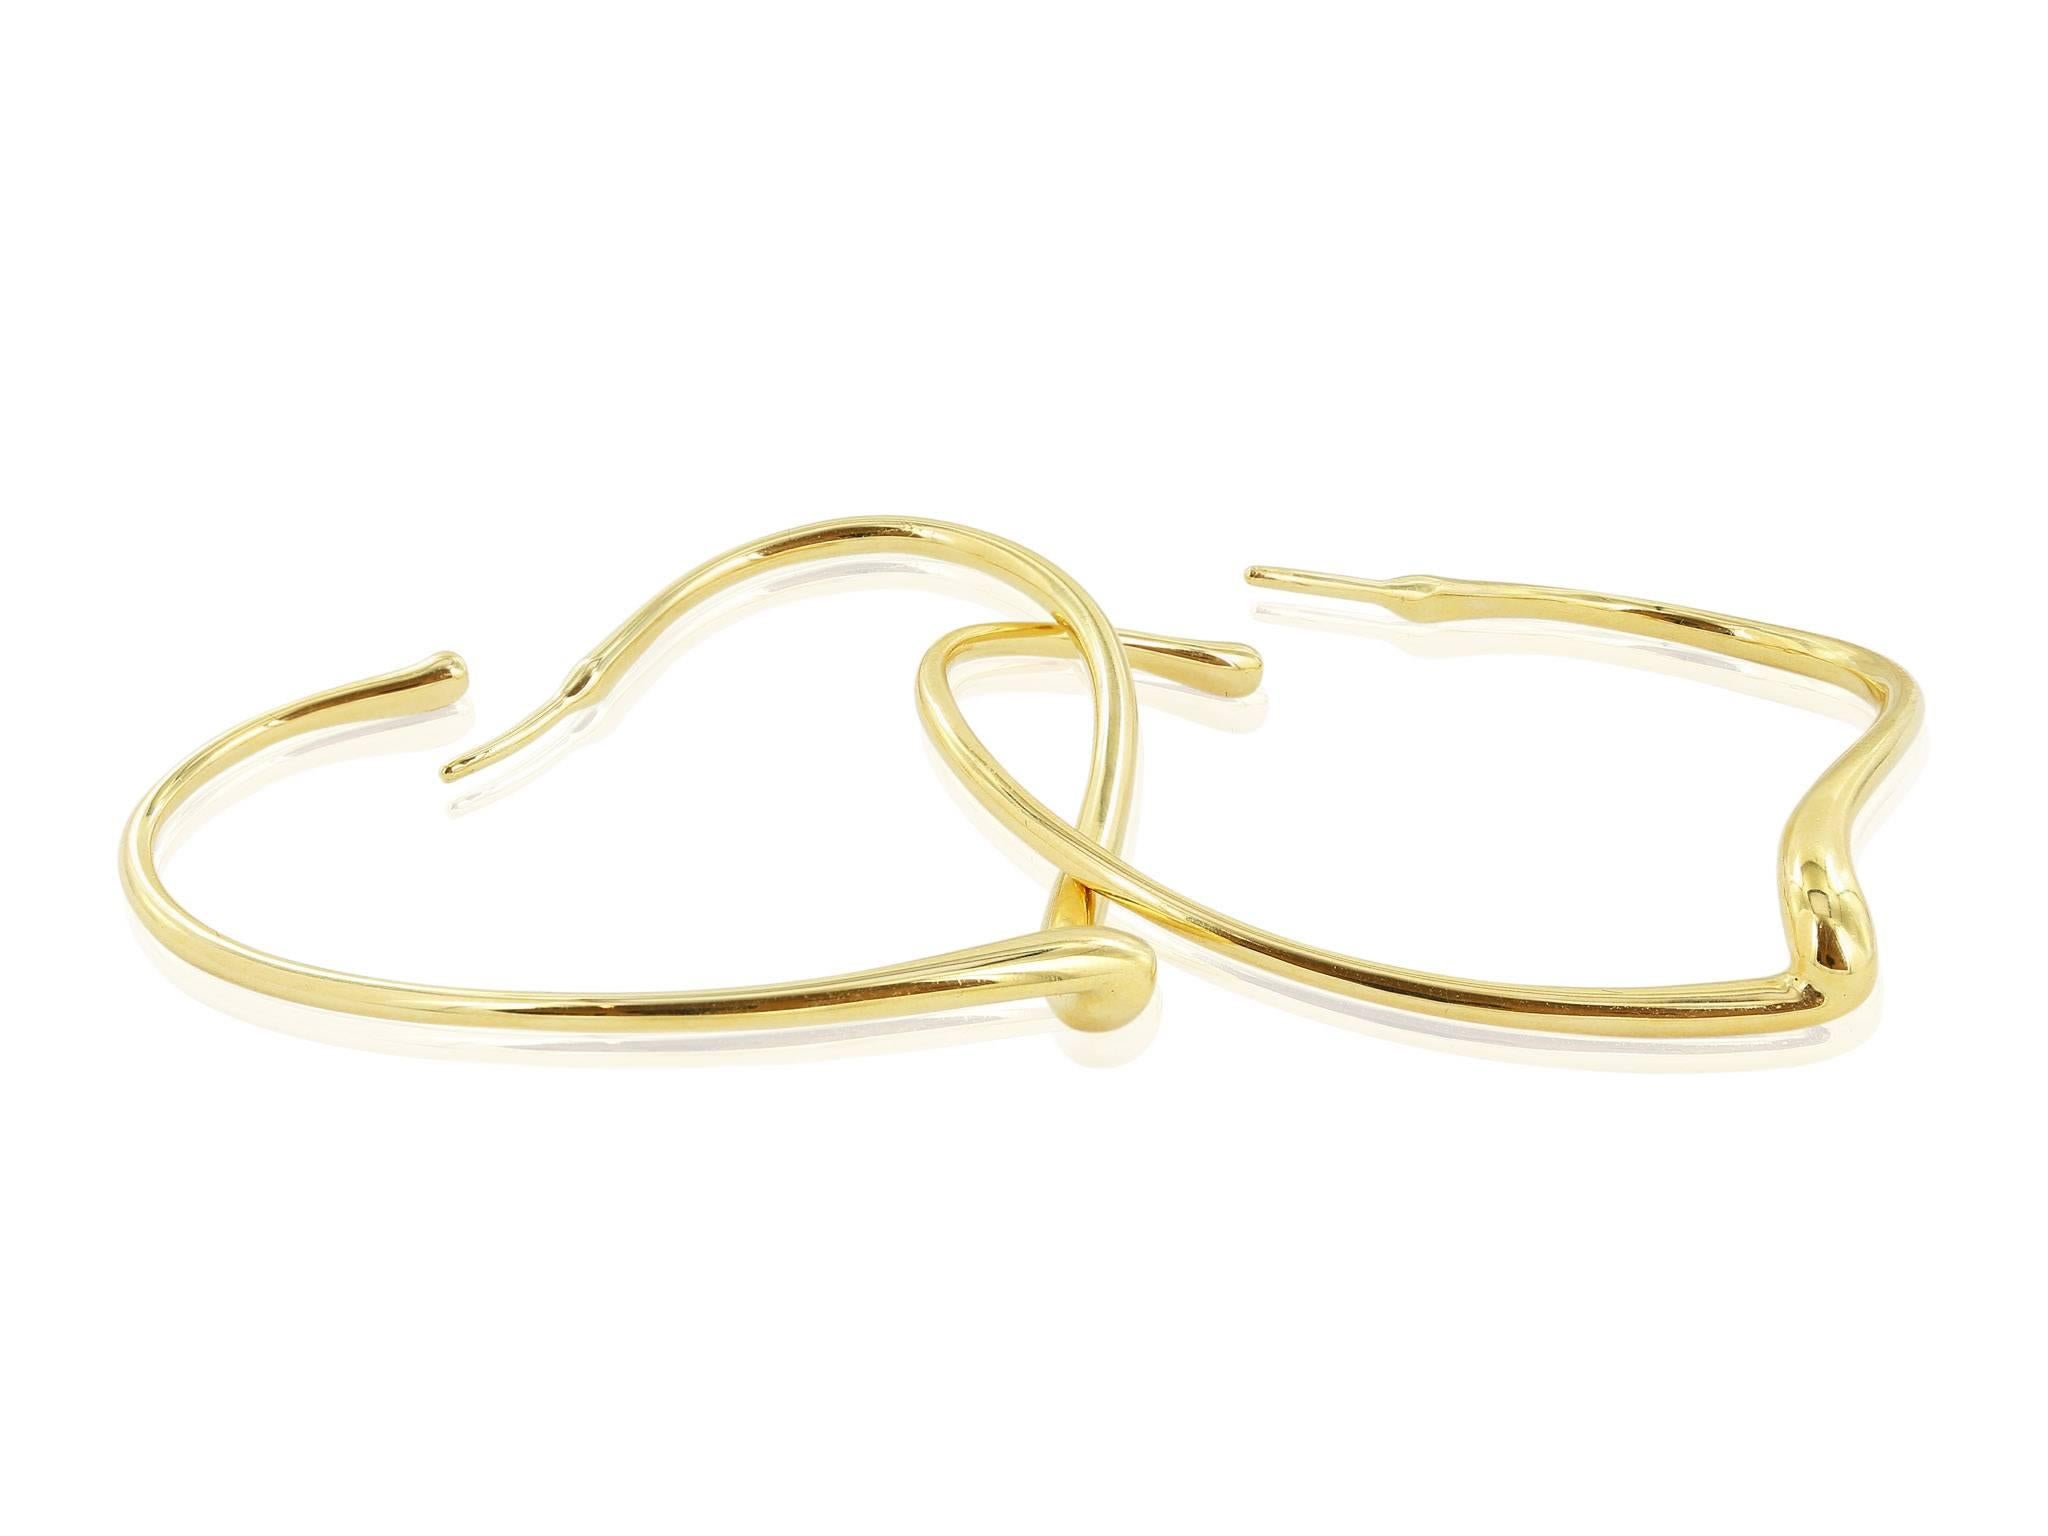 18 karat yellow gold heart shaped hoop earrings, signed Elsa Peretti Tiffany & Co.